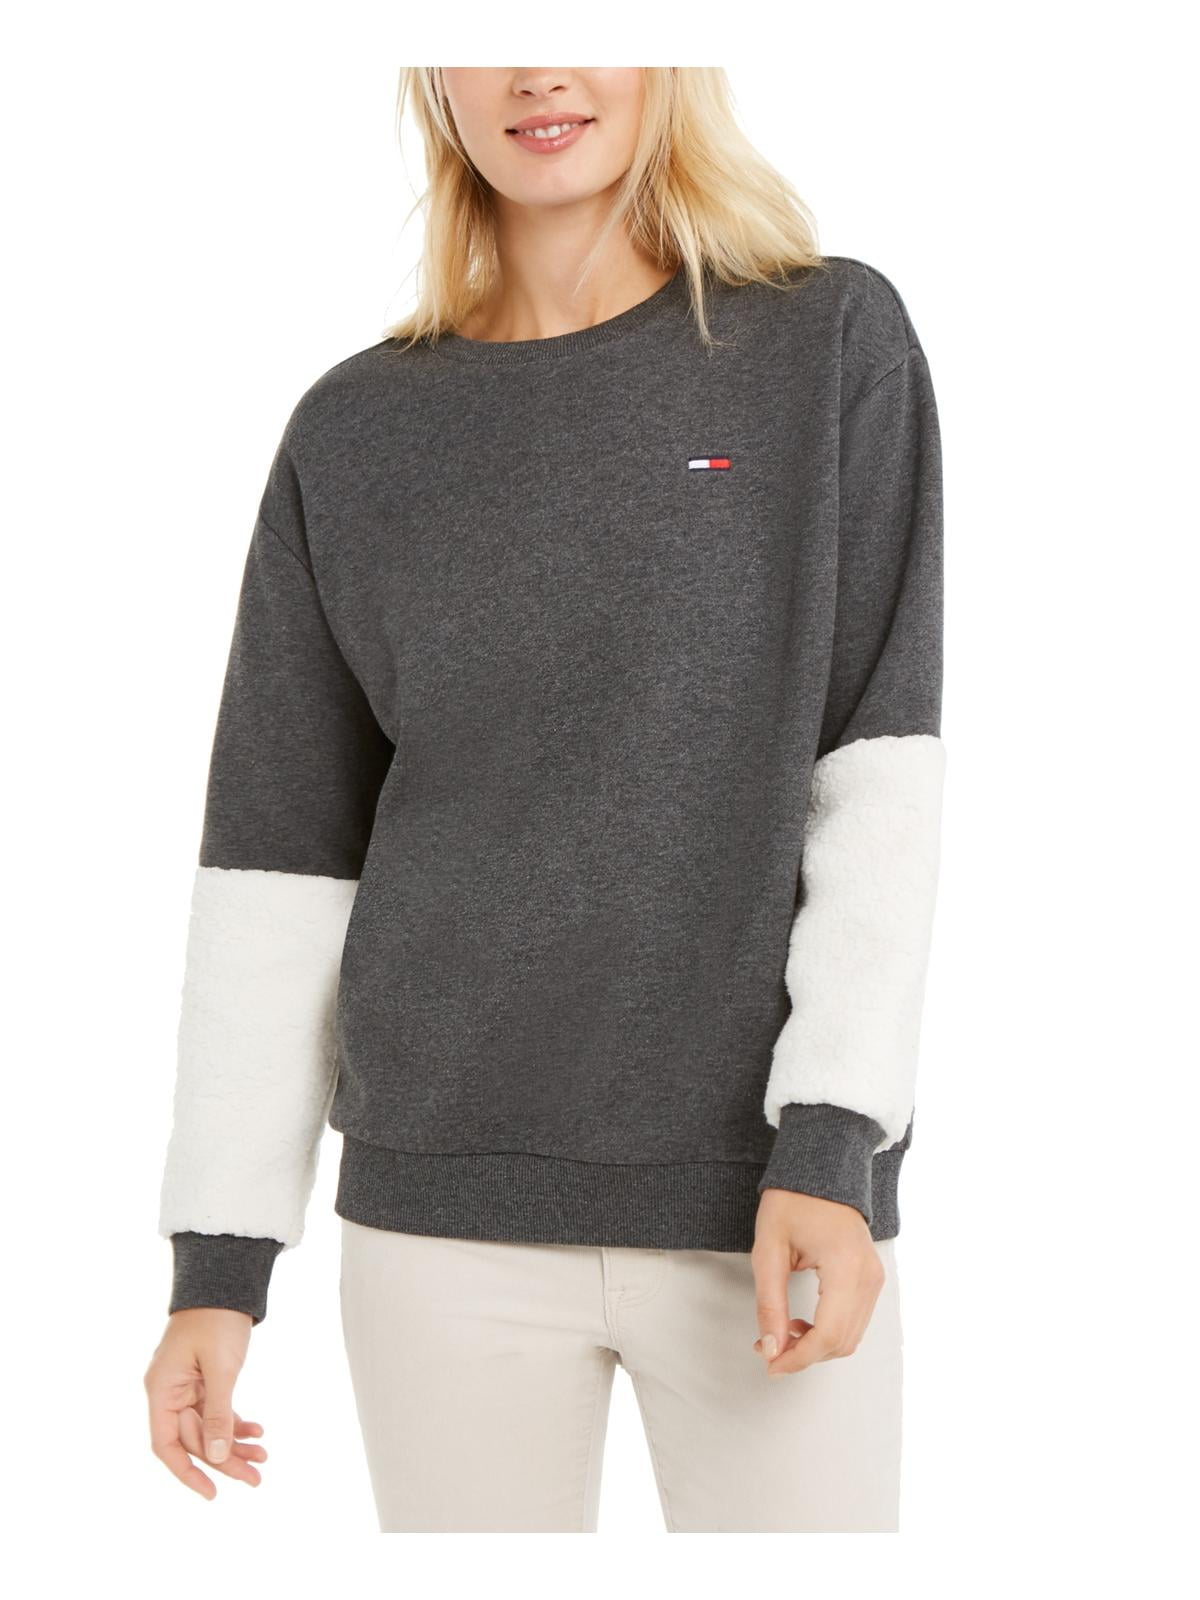 Tommy Hilfiger Women's Comfy Cozy Sweatshirt Gray Size Medium 